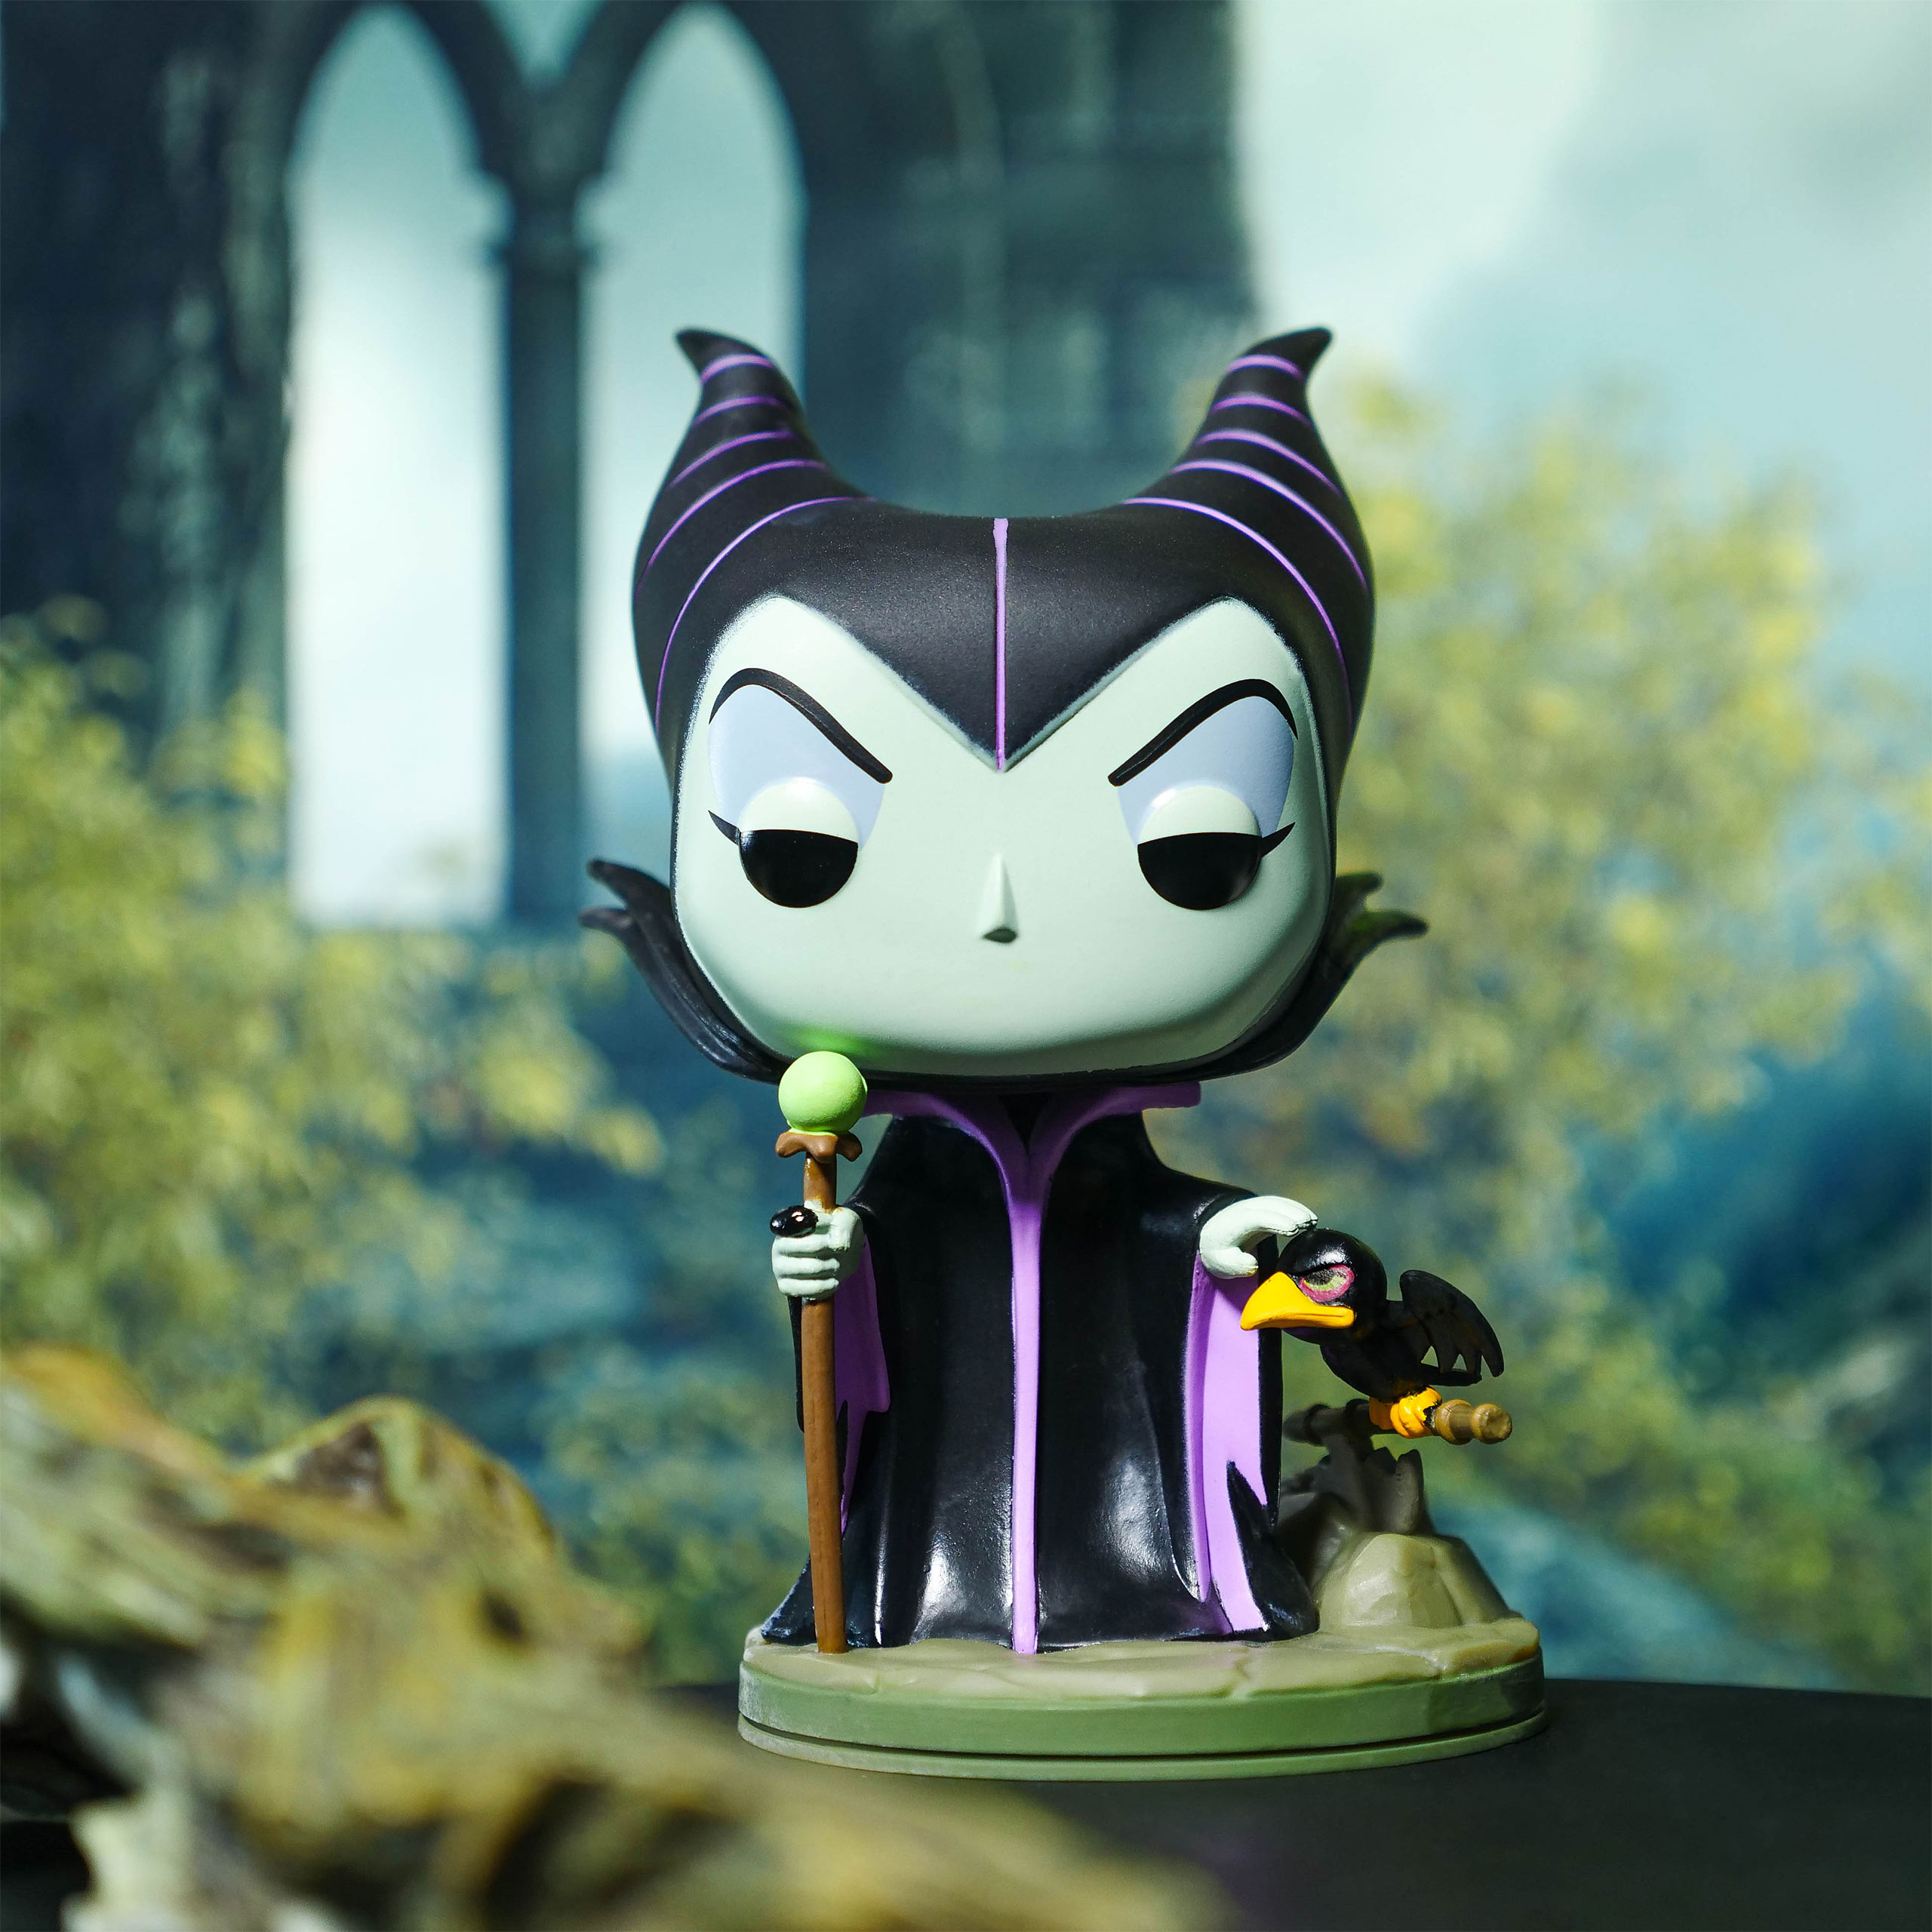 Disney Villains - Maleficent Funko Pop Figure